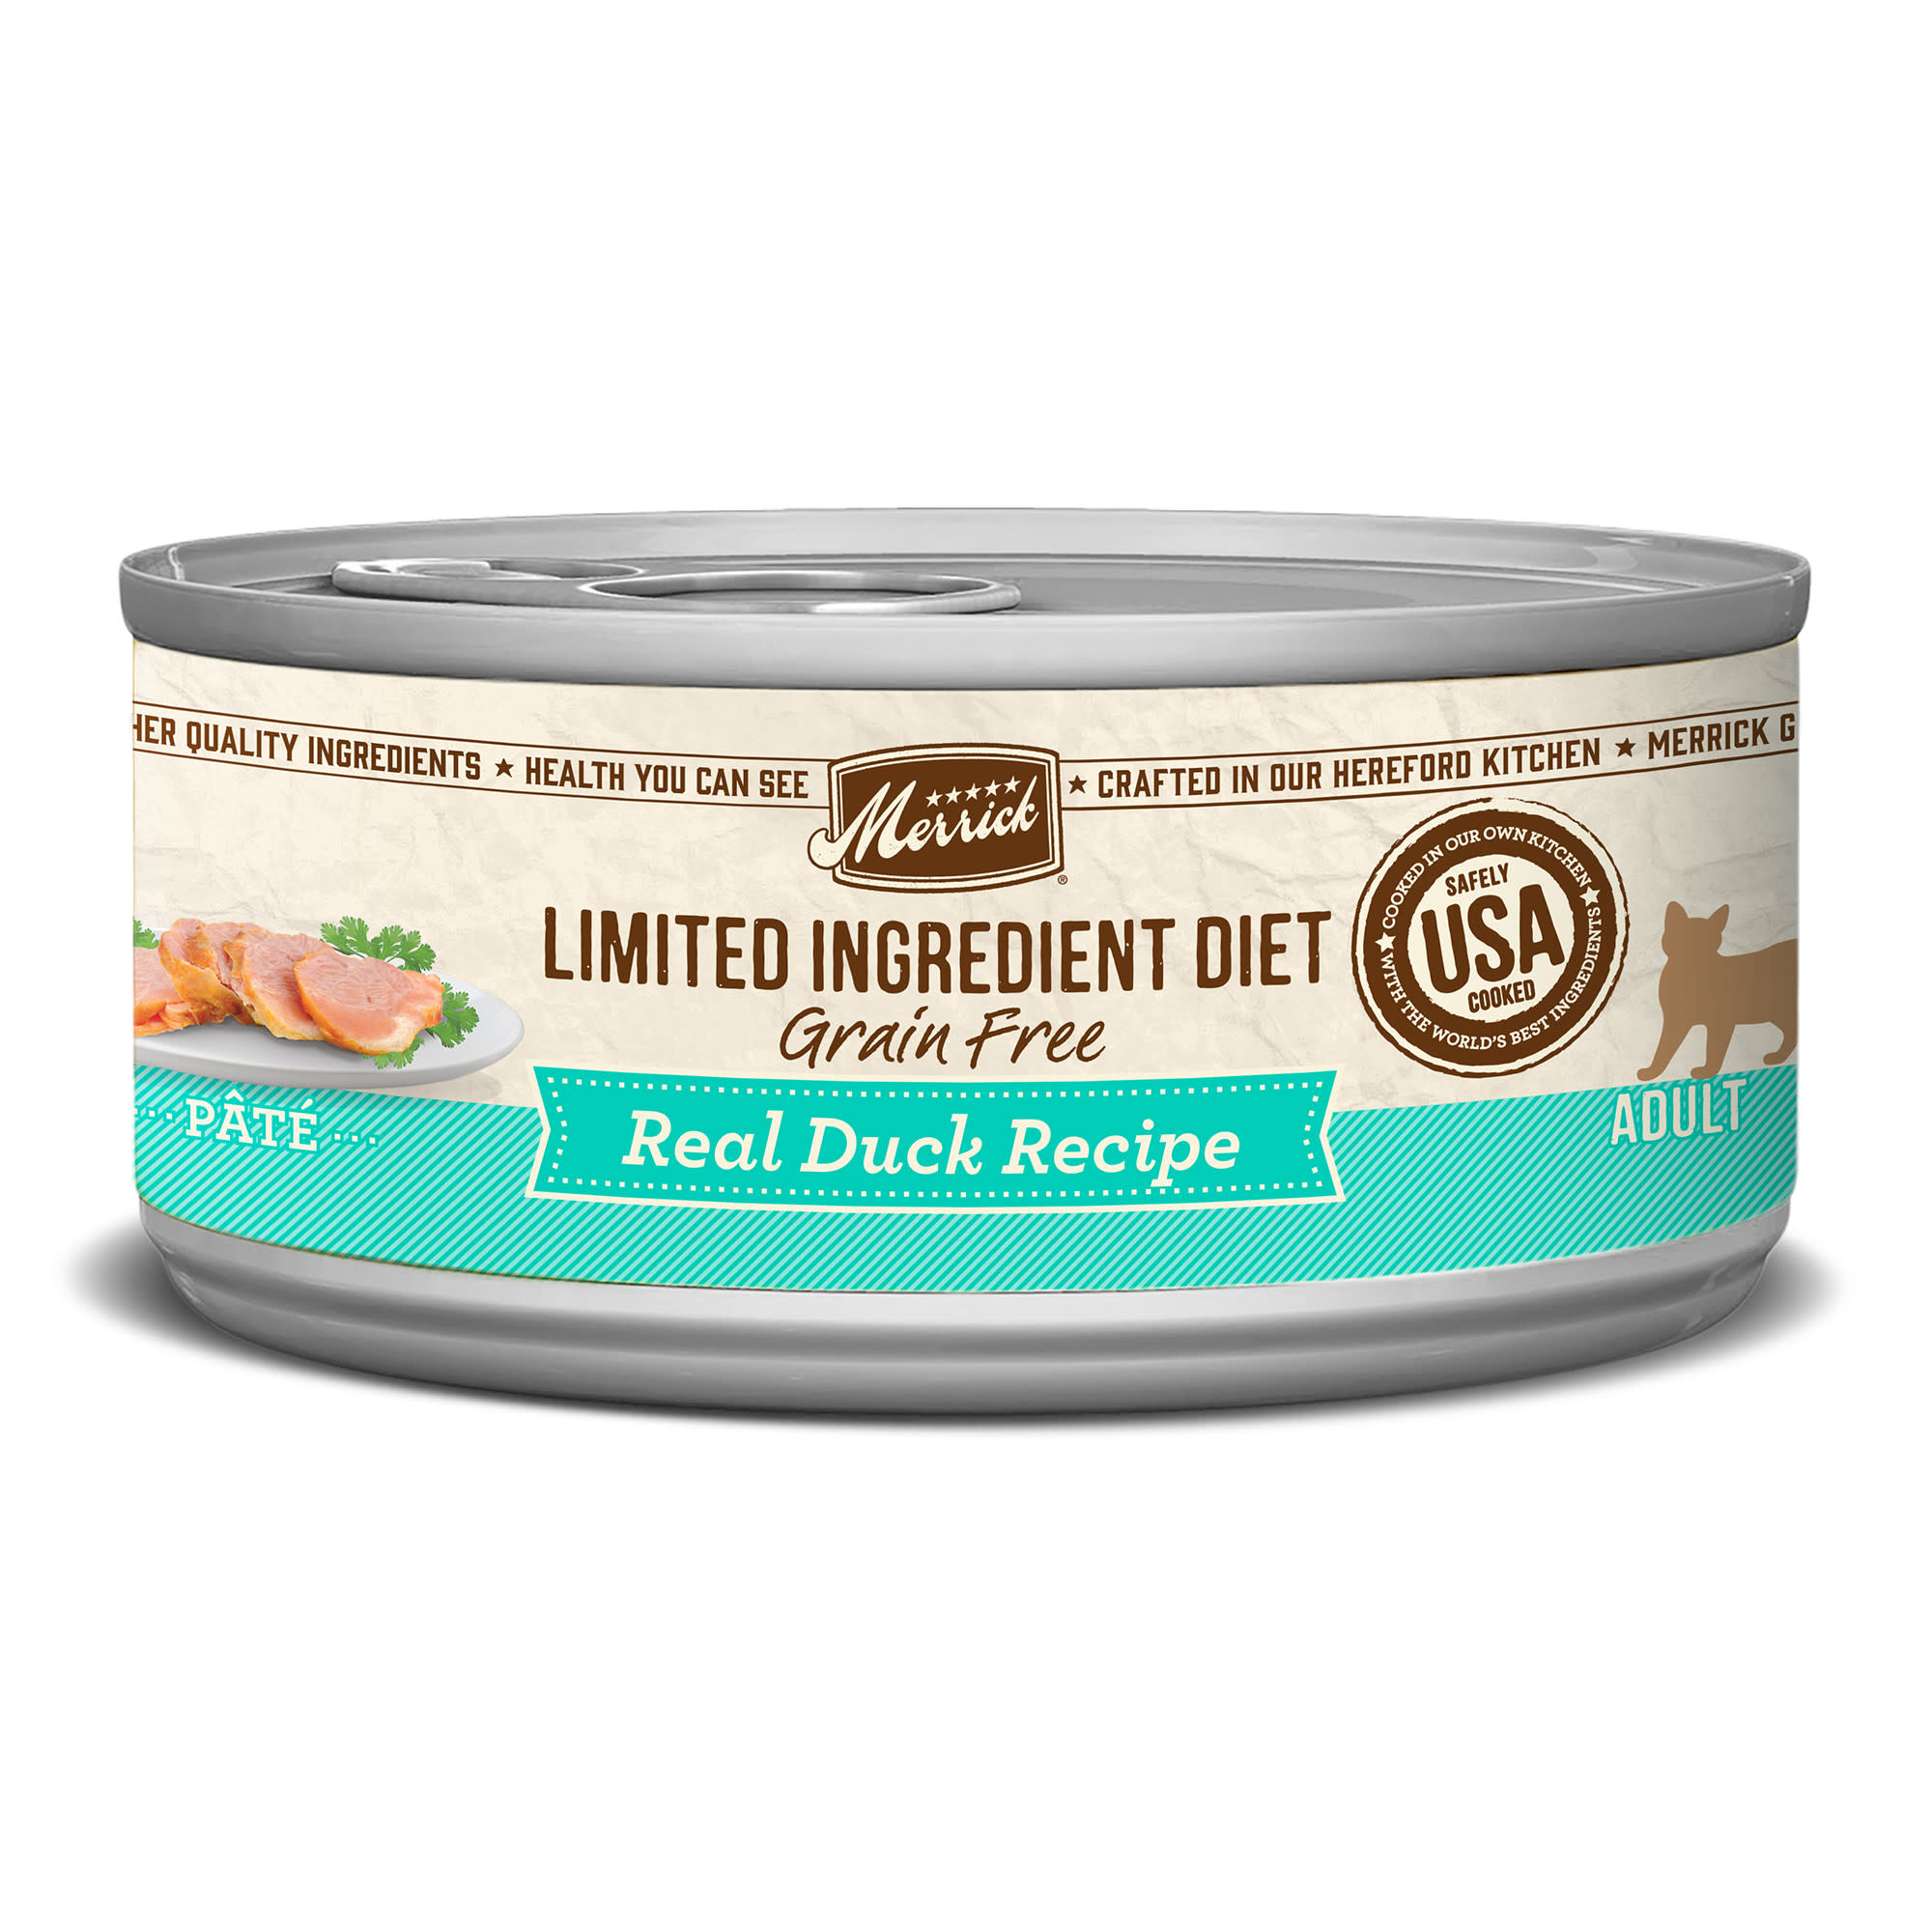 Merrick Limited Ingredient Diet Grain Free Duck Canned Cat Food, 2.75